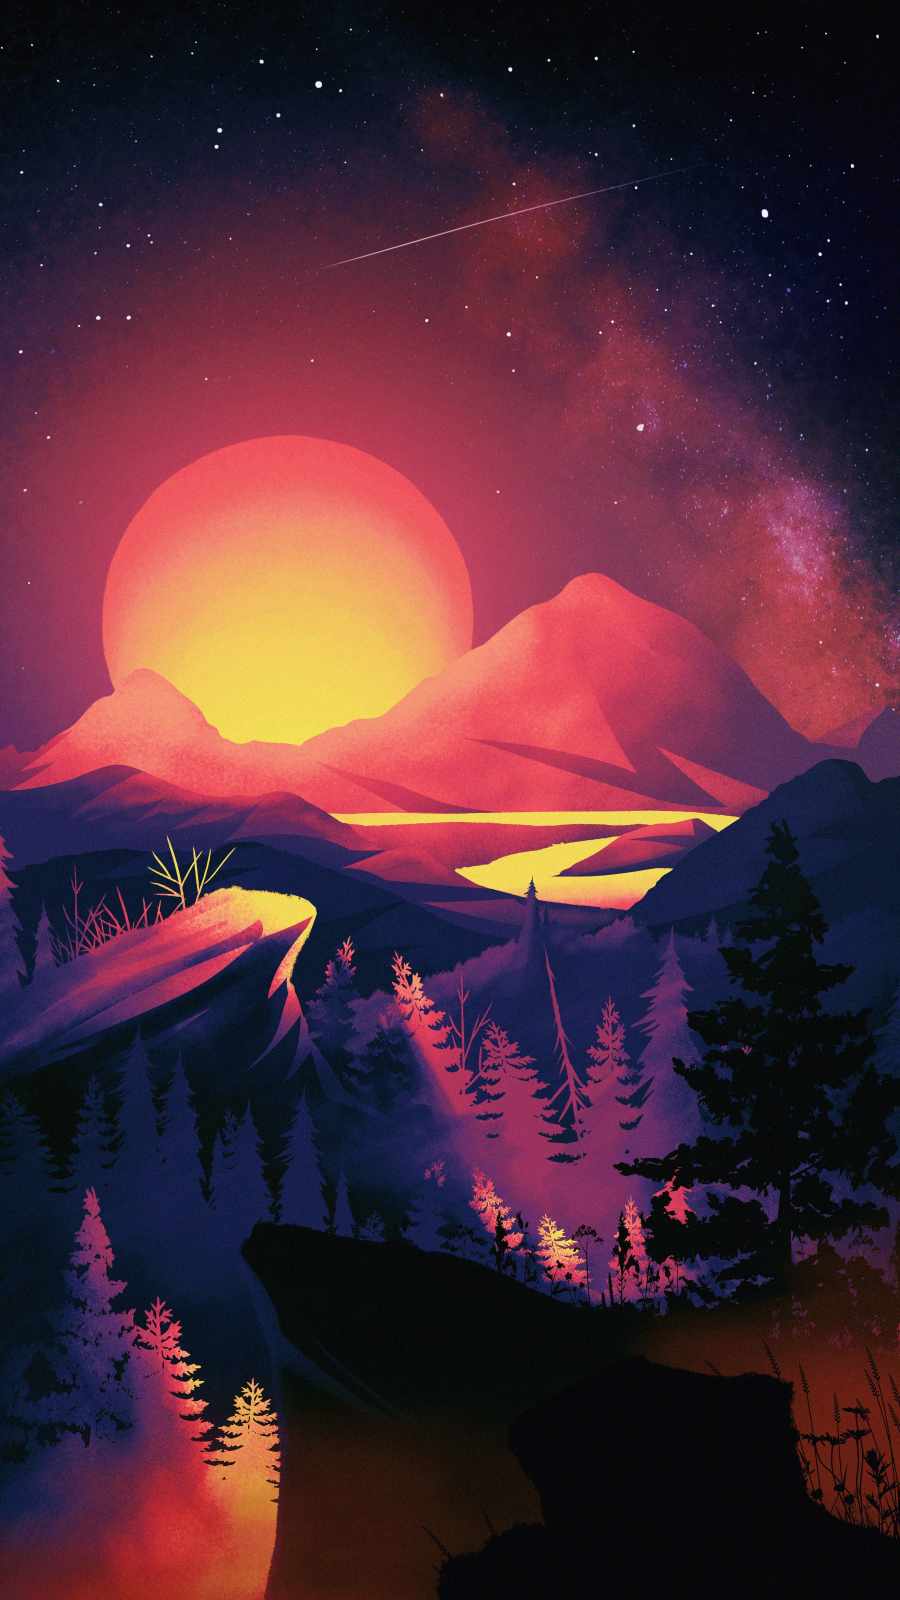 A colorful illustration of a sunset over a mountain range - Sunrise, landscape